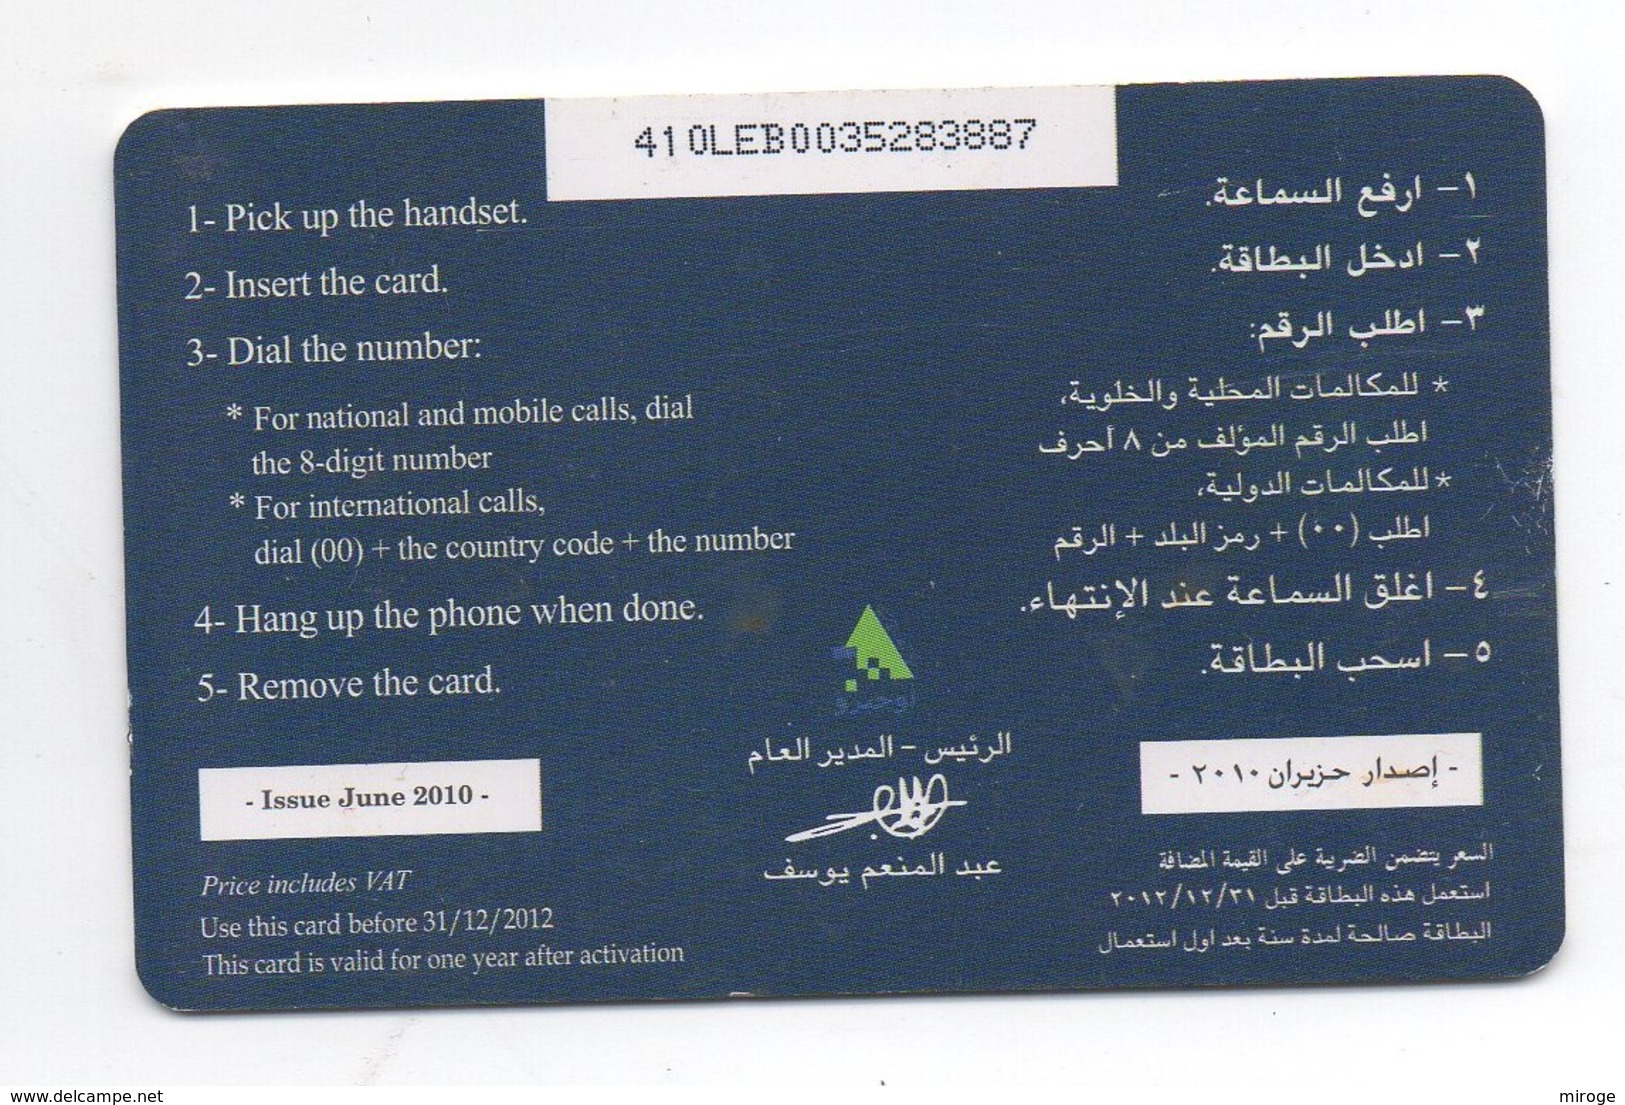 Zouk Mosbeh 2010 Used Phonecard  Lebanon , Liban  Libanon - Liban